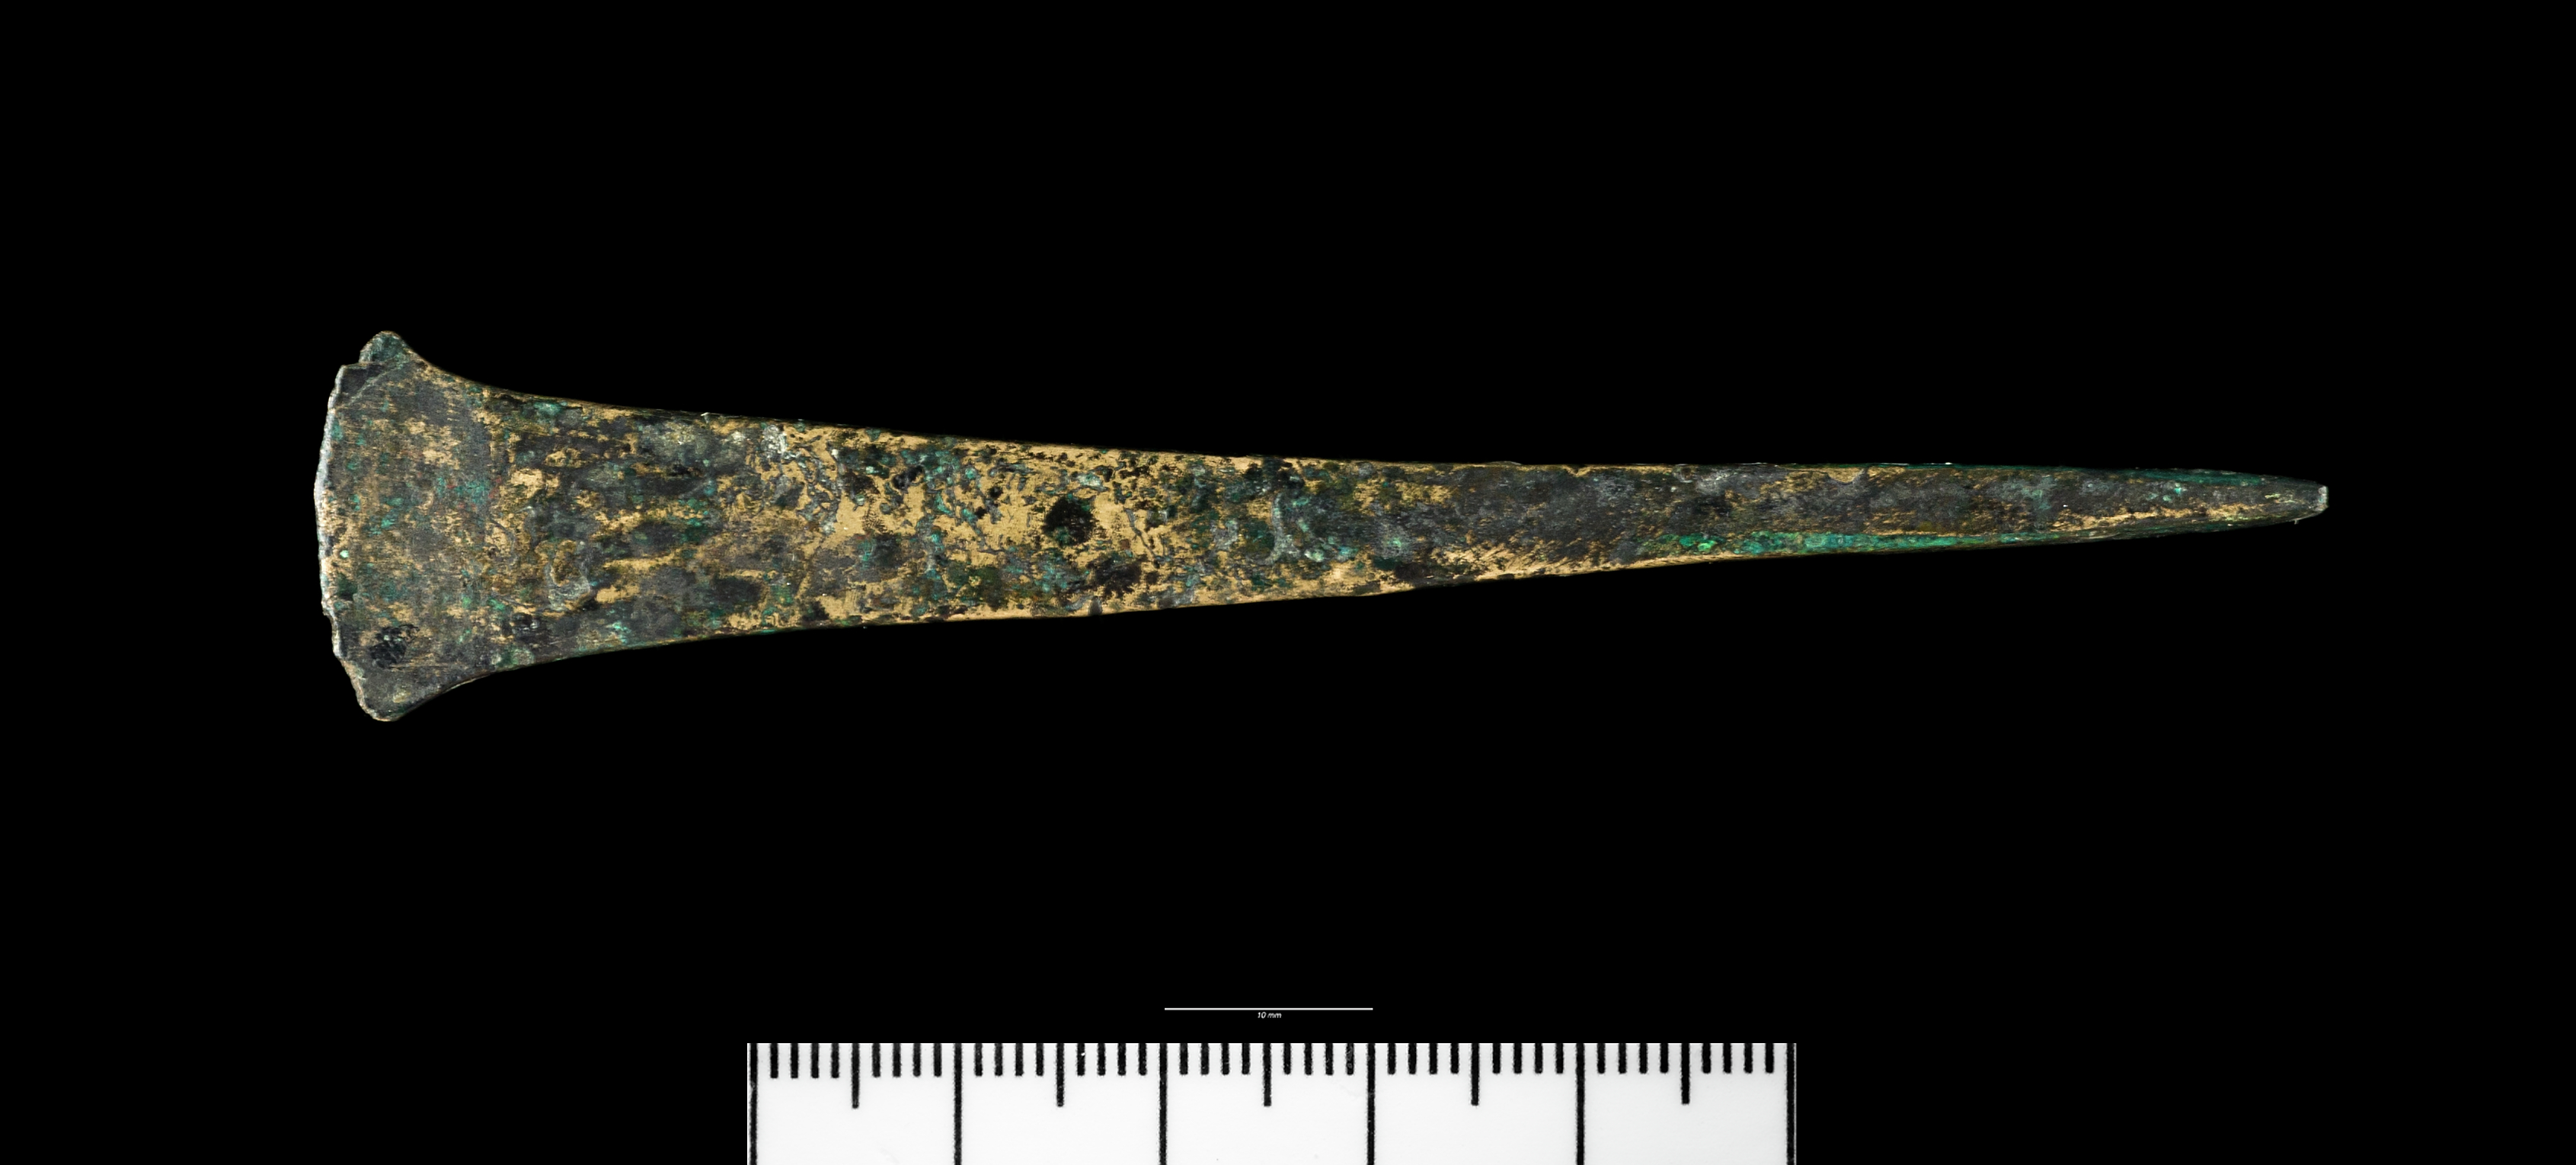 Bronze Age bronze chisel